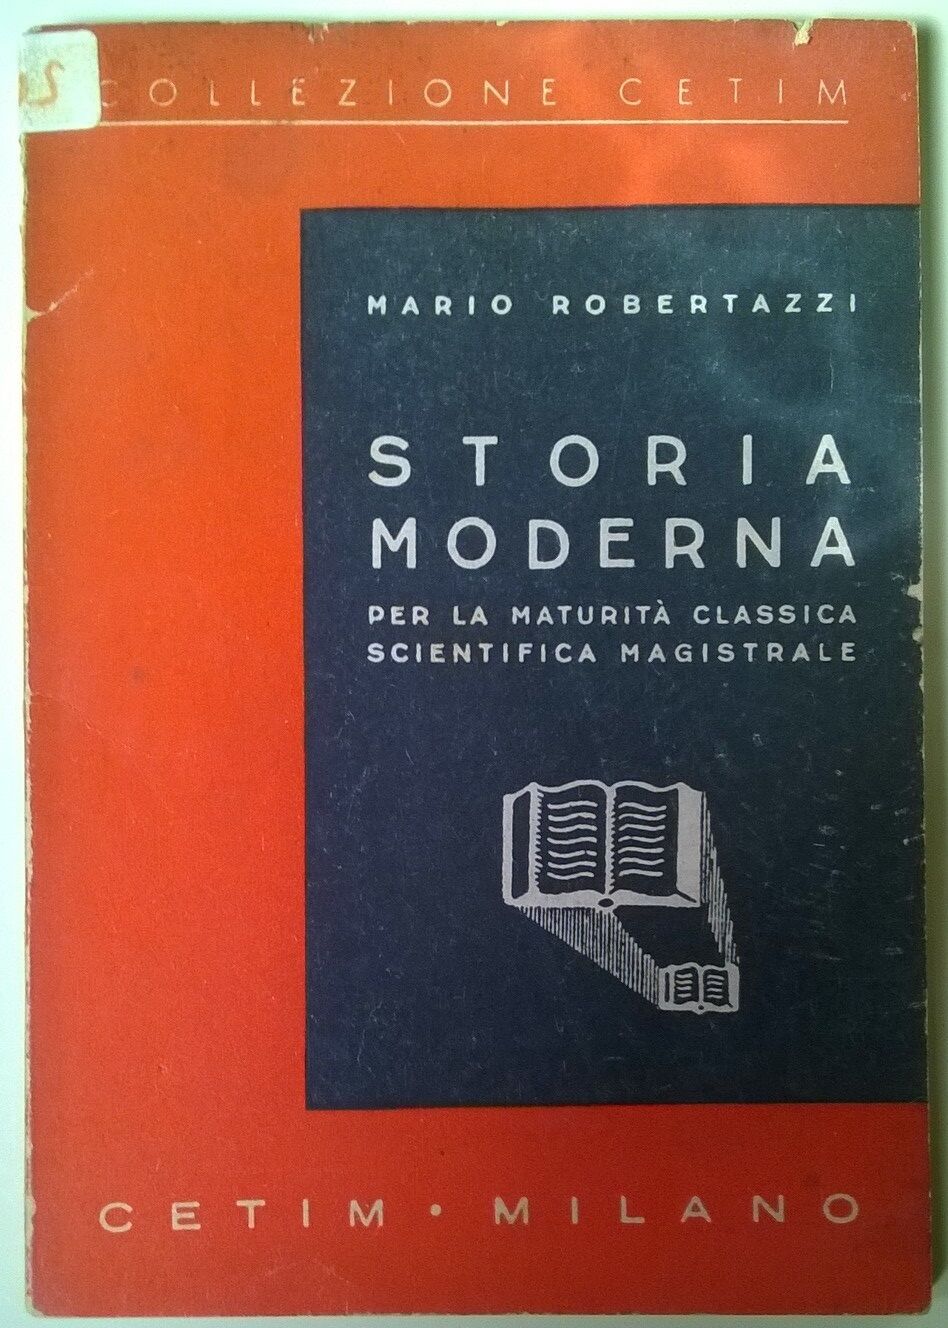 Storia Moderna per la maturit? scientifica ... - M. Robertazzi - Cetim, 1944 - L